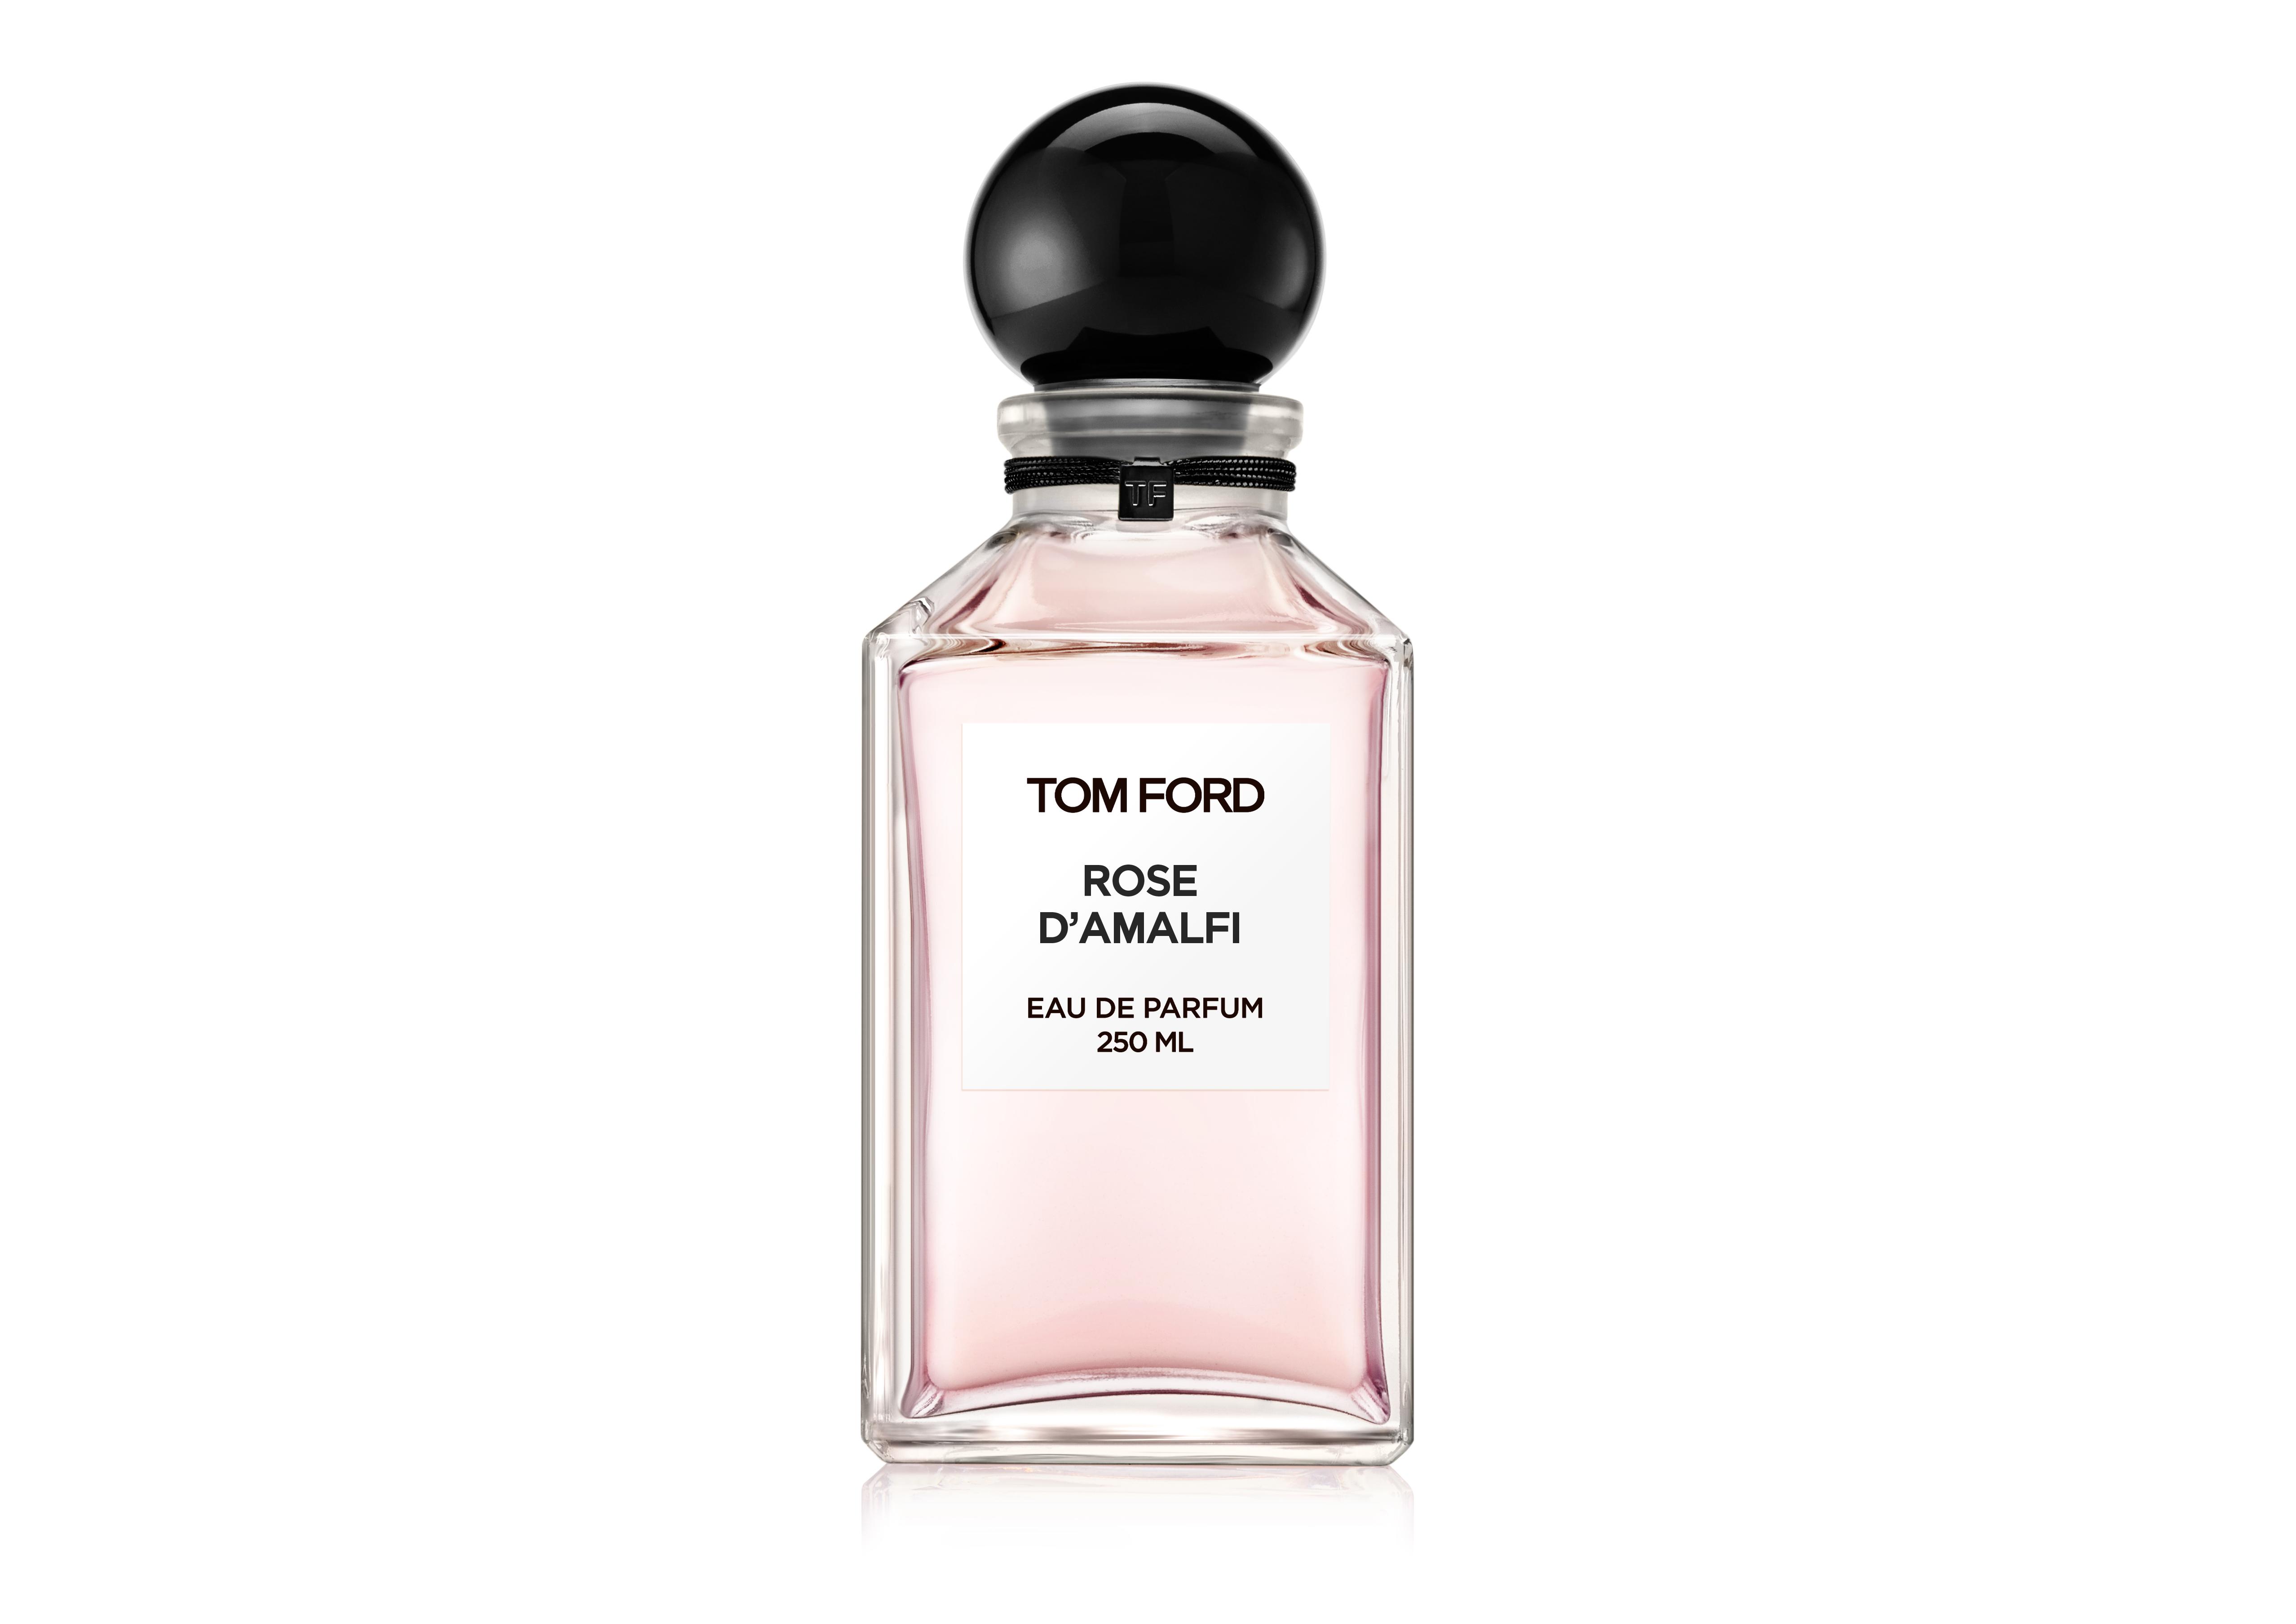 Tom Ford's rose garden inspires fragrance trilogy